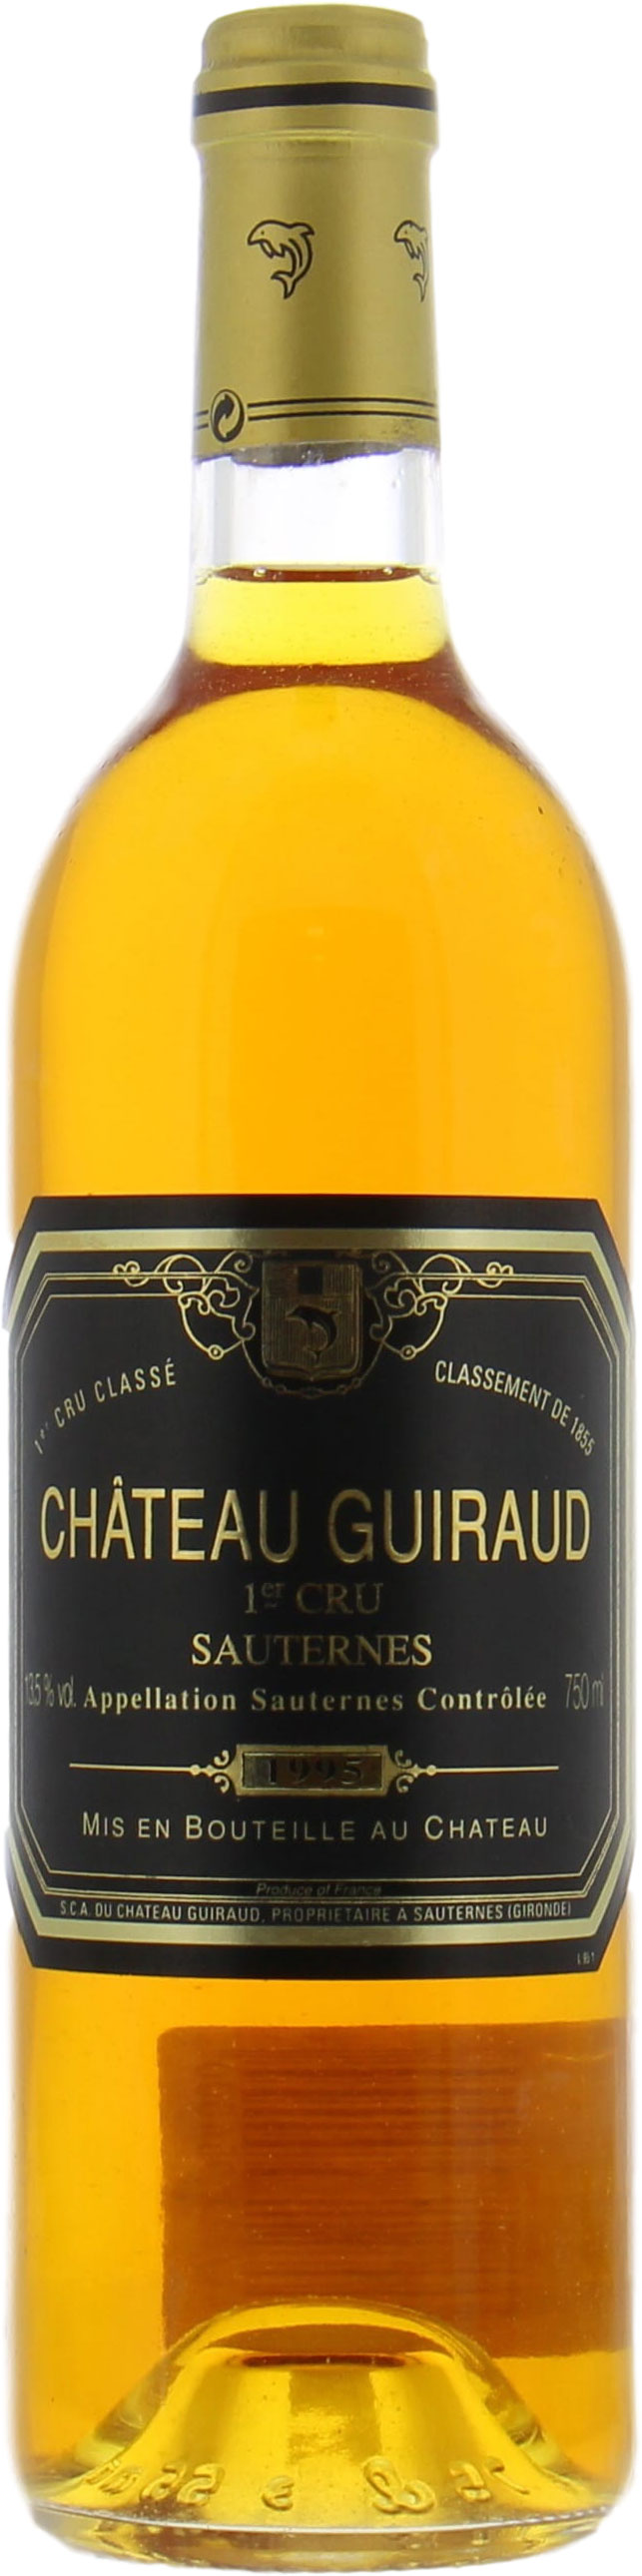 Chateau Guiraud - Chateau Guiraud 1995 Perfect